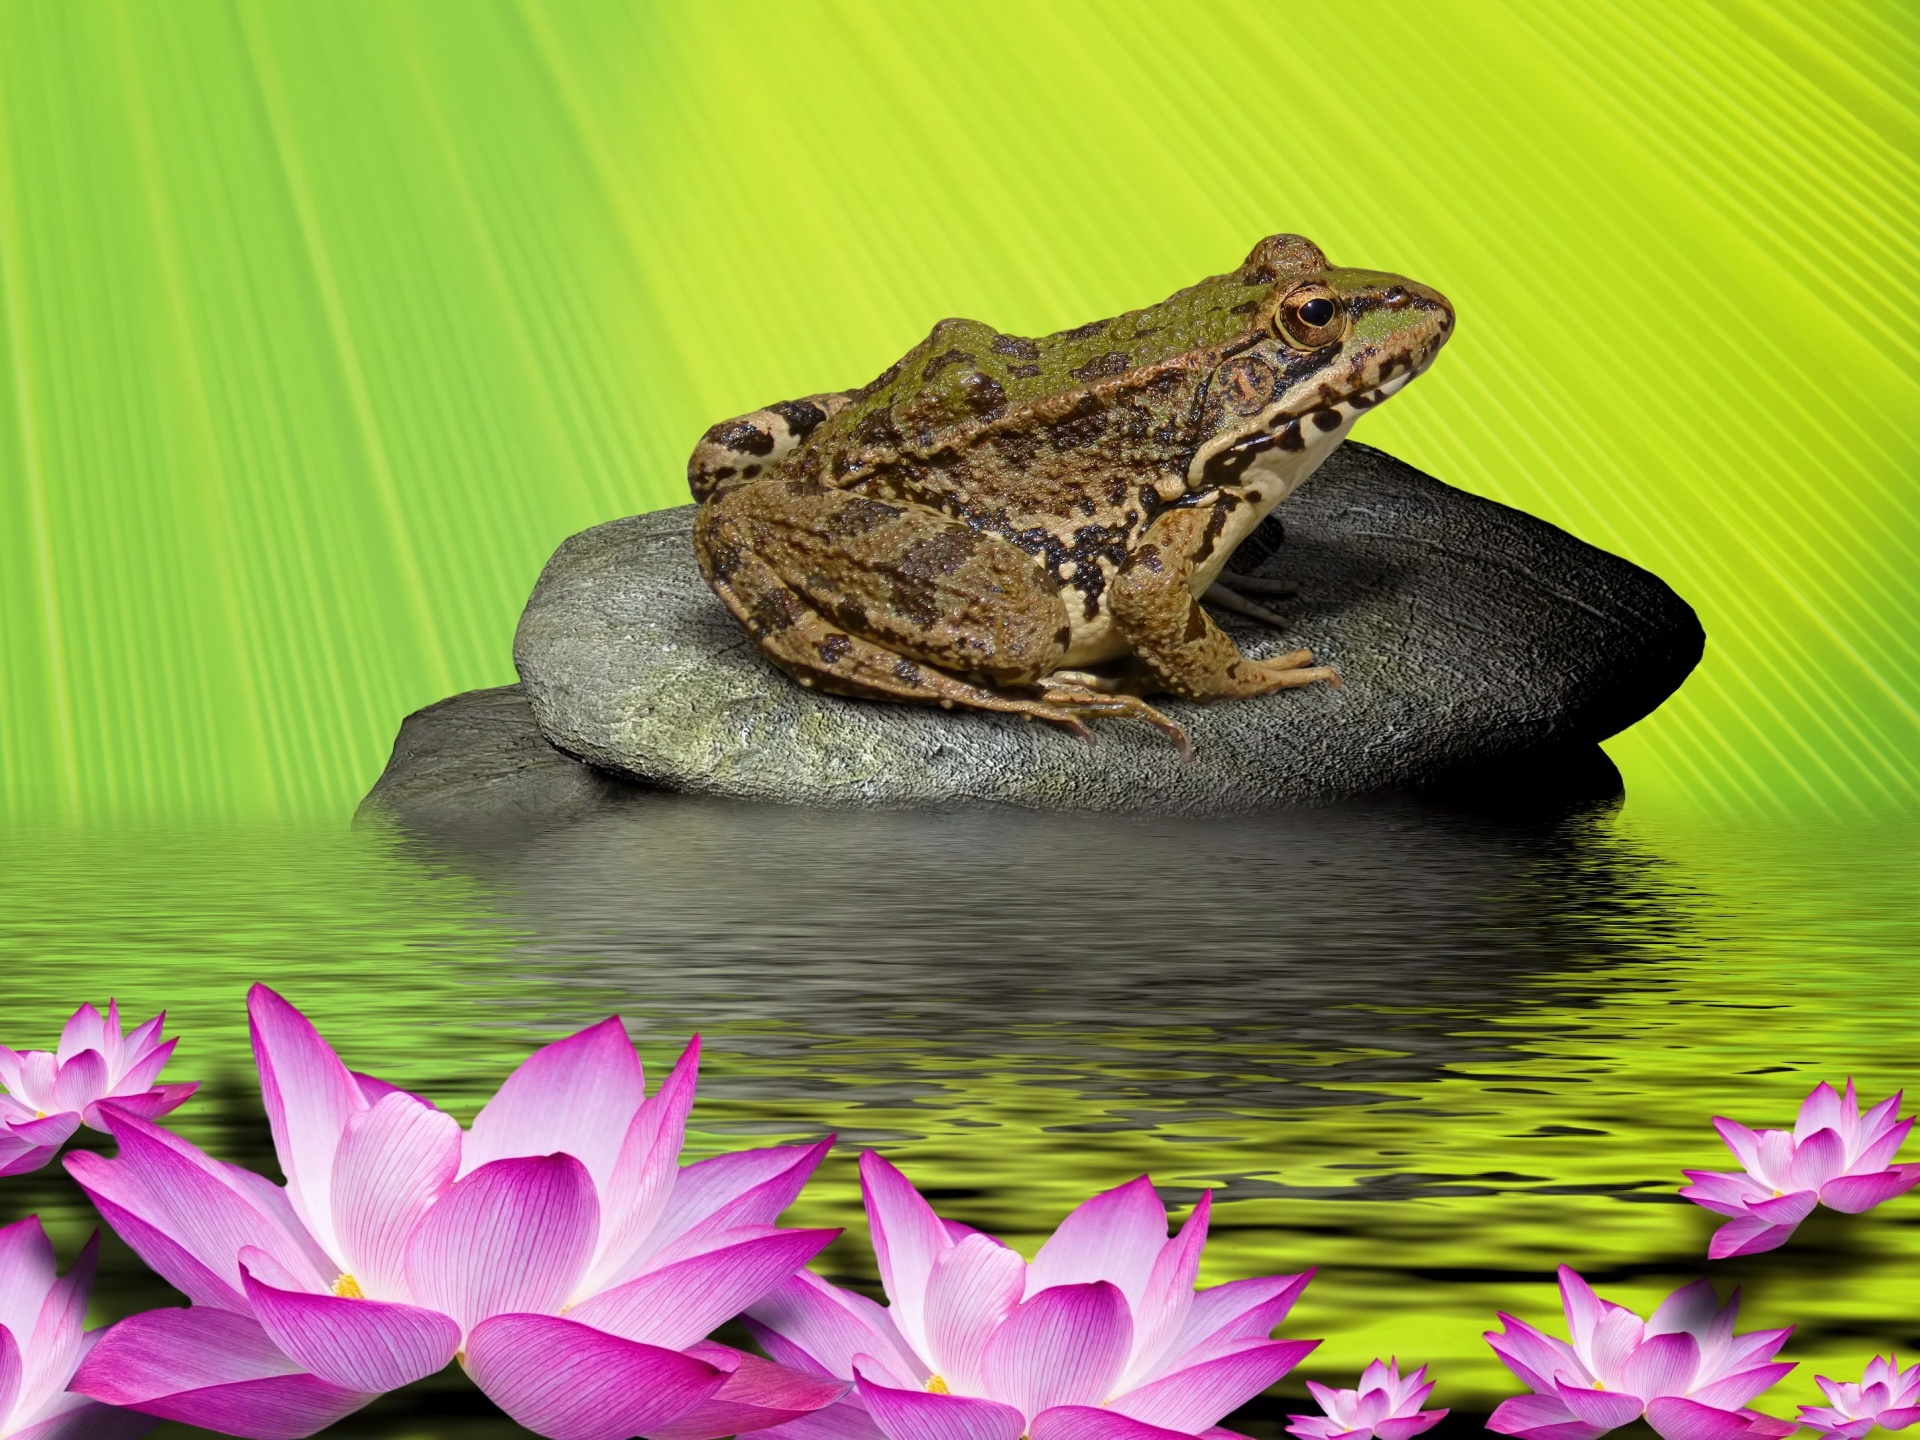 Frog On Stone